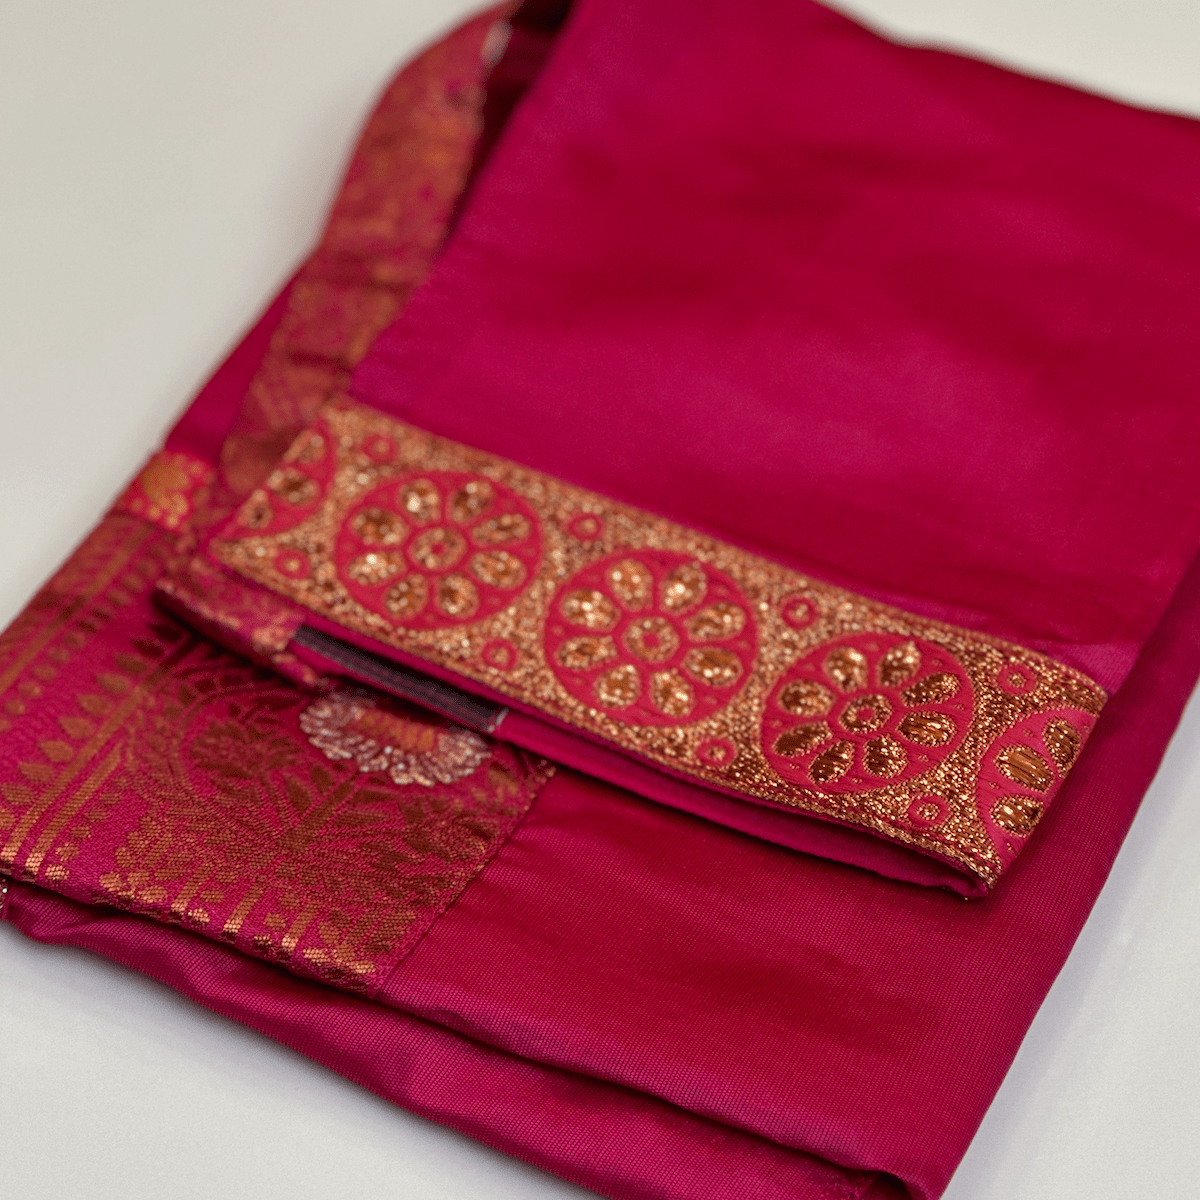 Cool & Casual Handmade Sari Aprons-Fuchsia with Copper Ribbon #14-Magic Hour